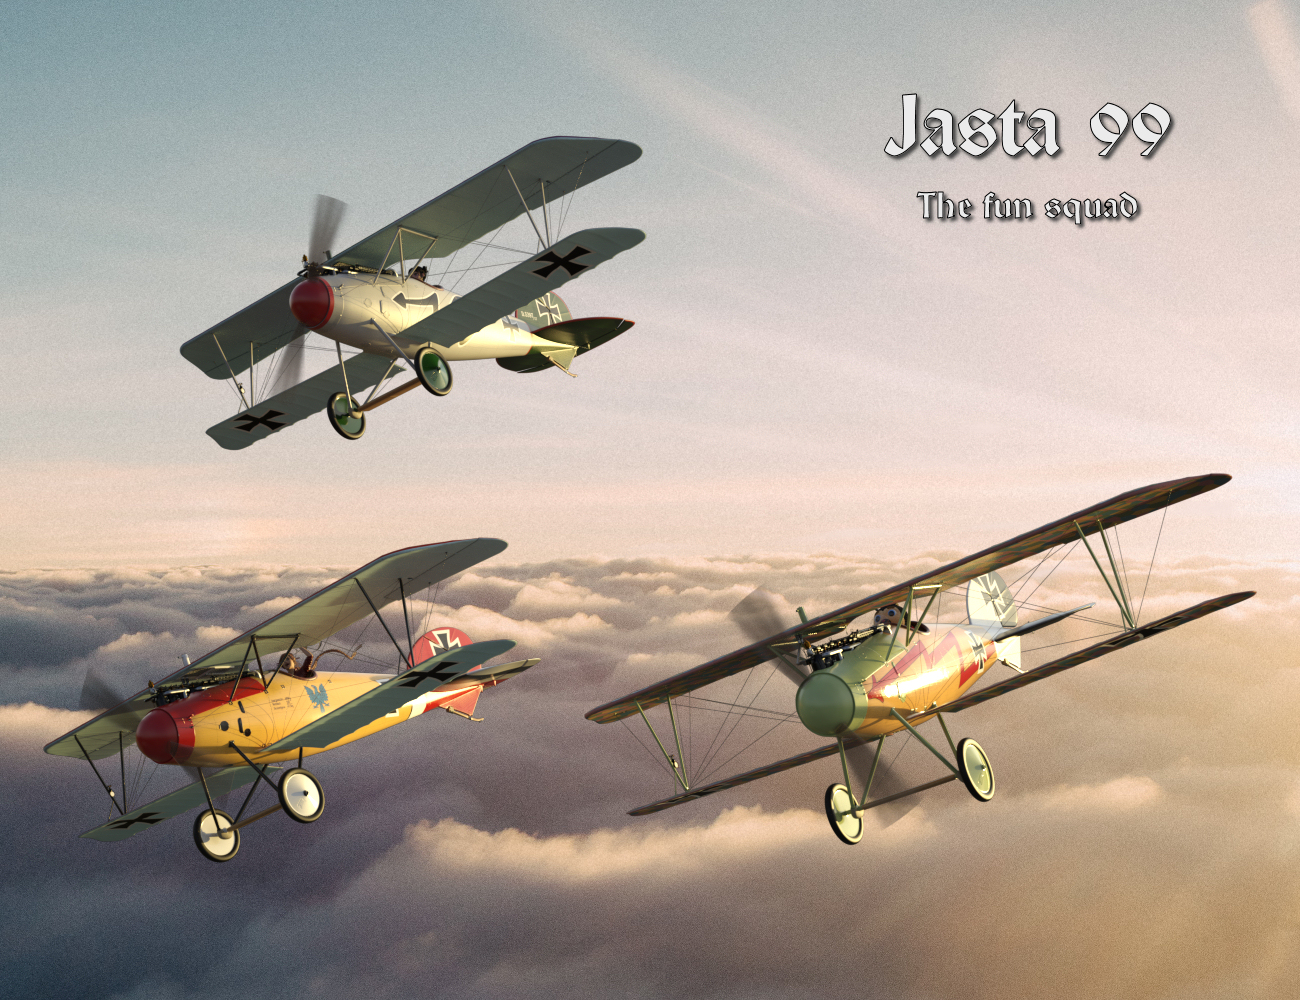 Albatros D.Va WWI Biplane by: Eagle99, 3D Models by Daz 3D